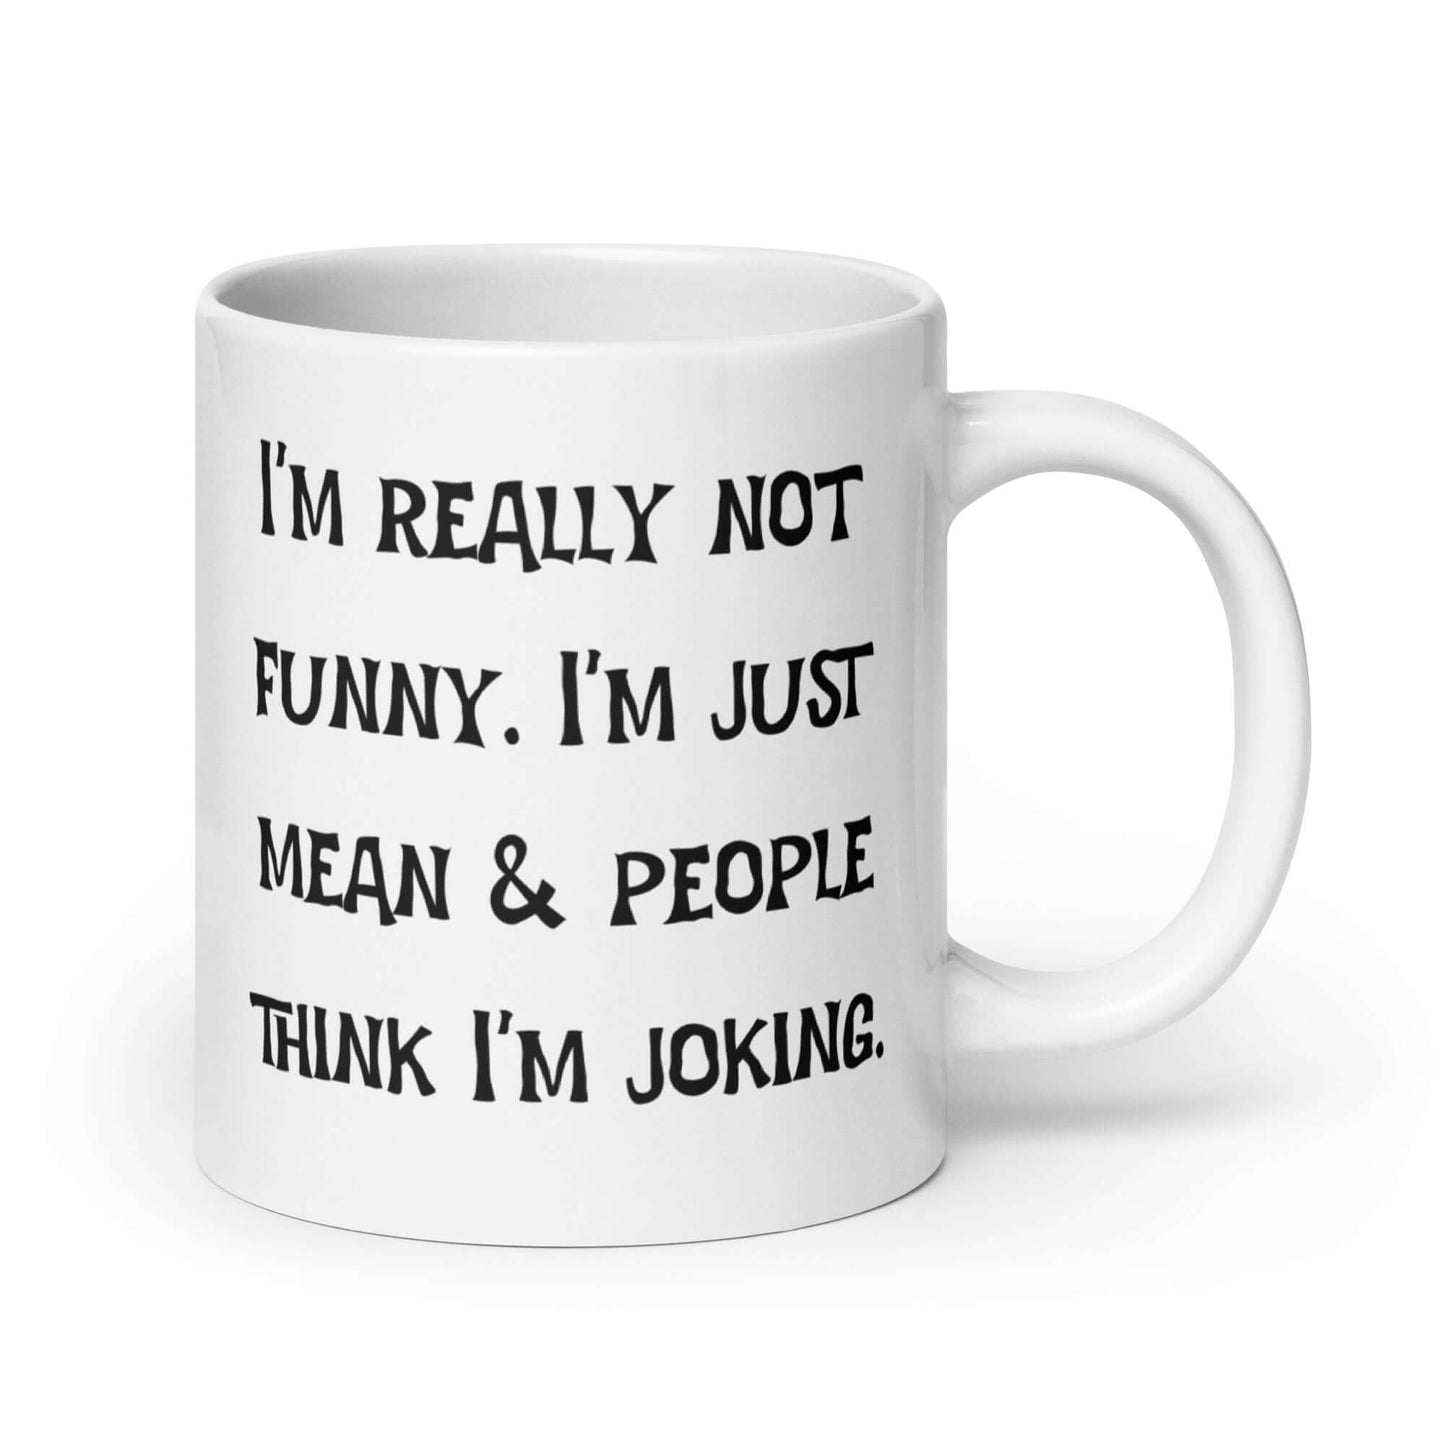 I'm really not funny sarcastic mean mug.